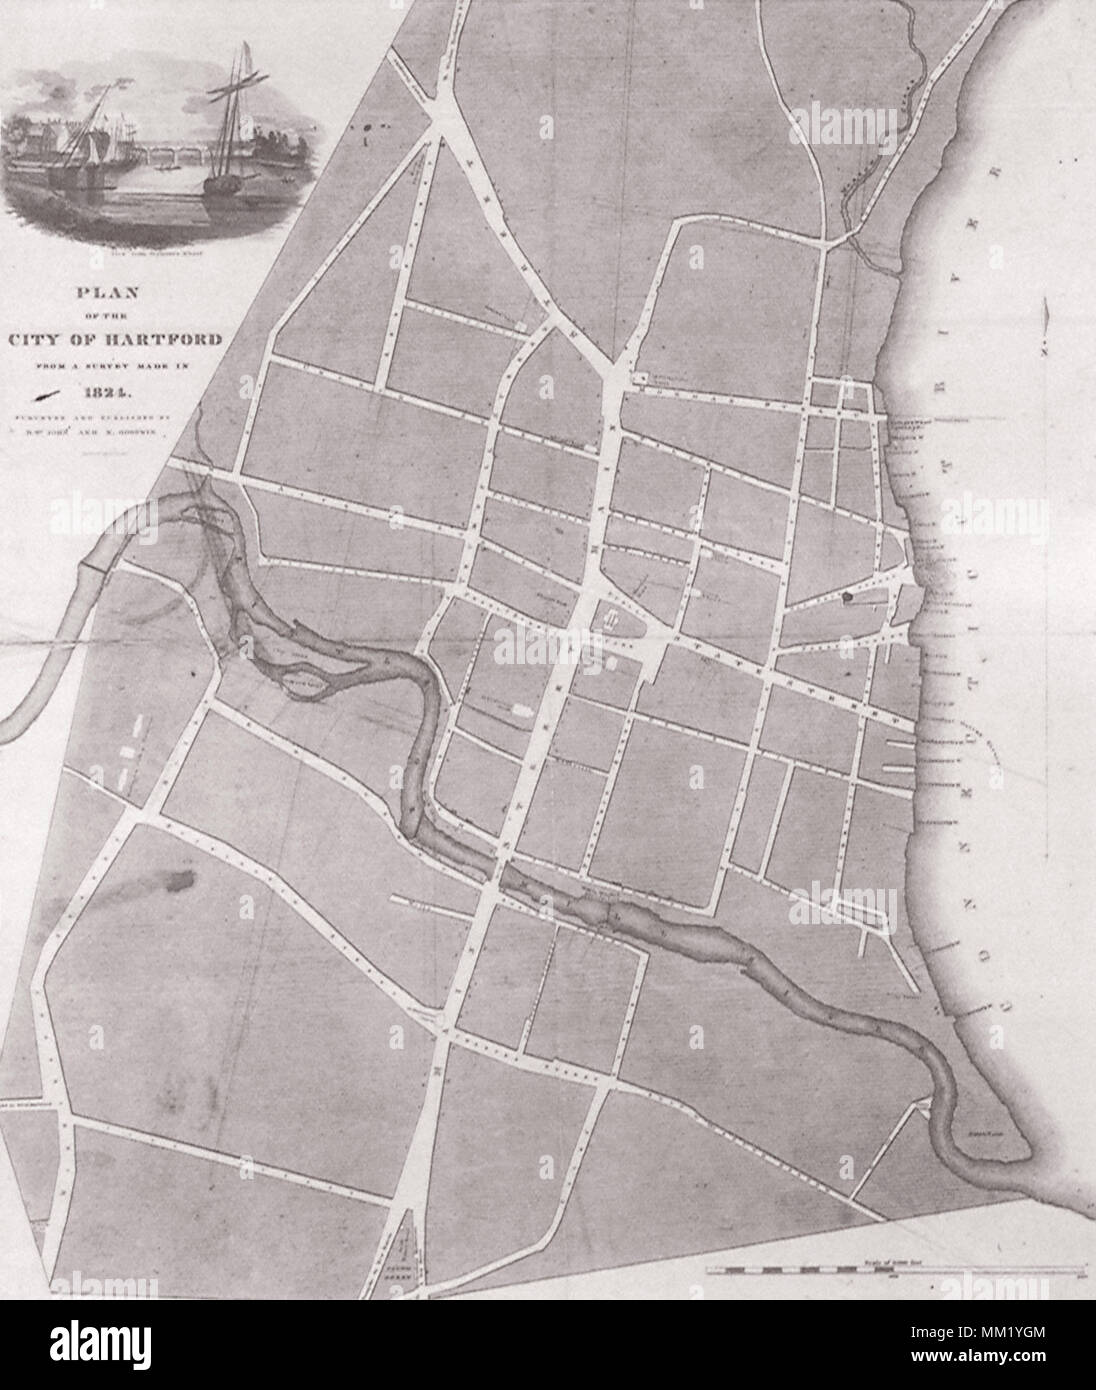 Plan of the City of Hartford. Hartford. 1824 Stock Photo